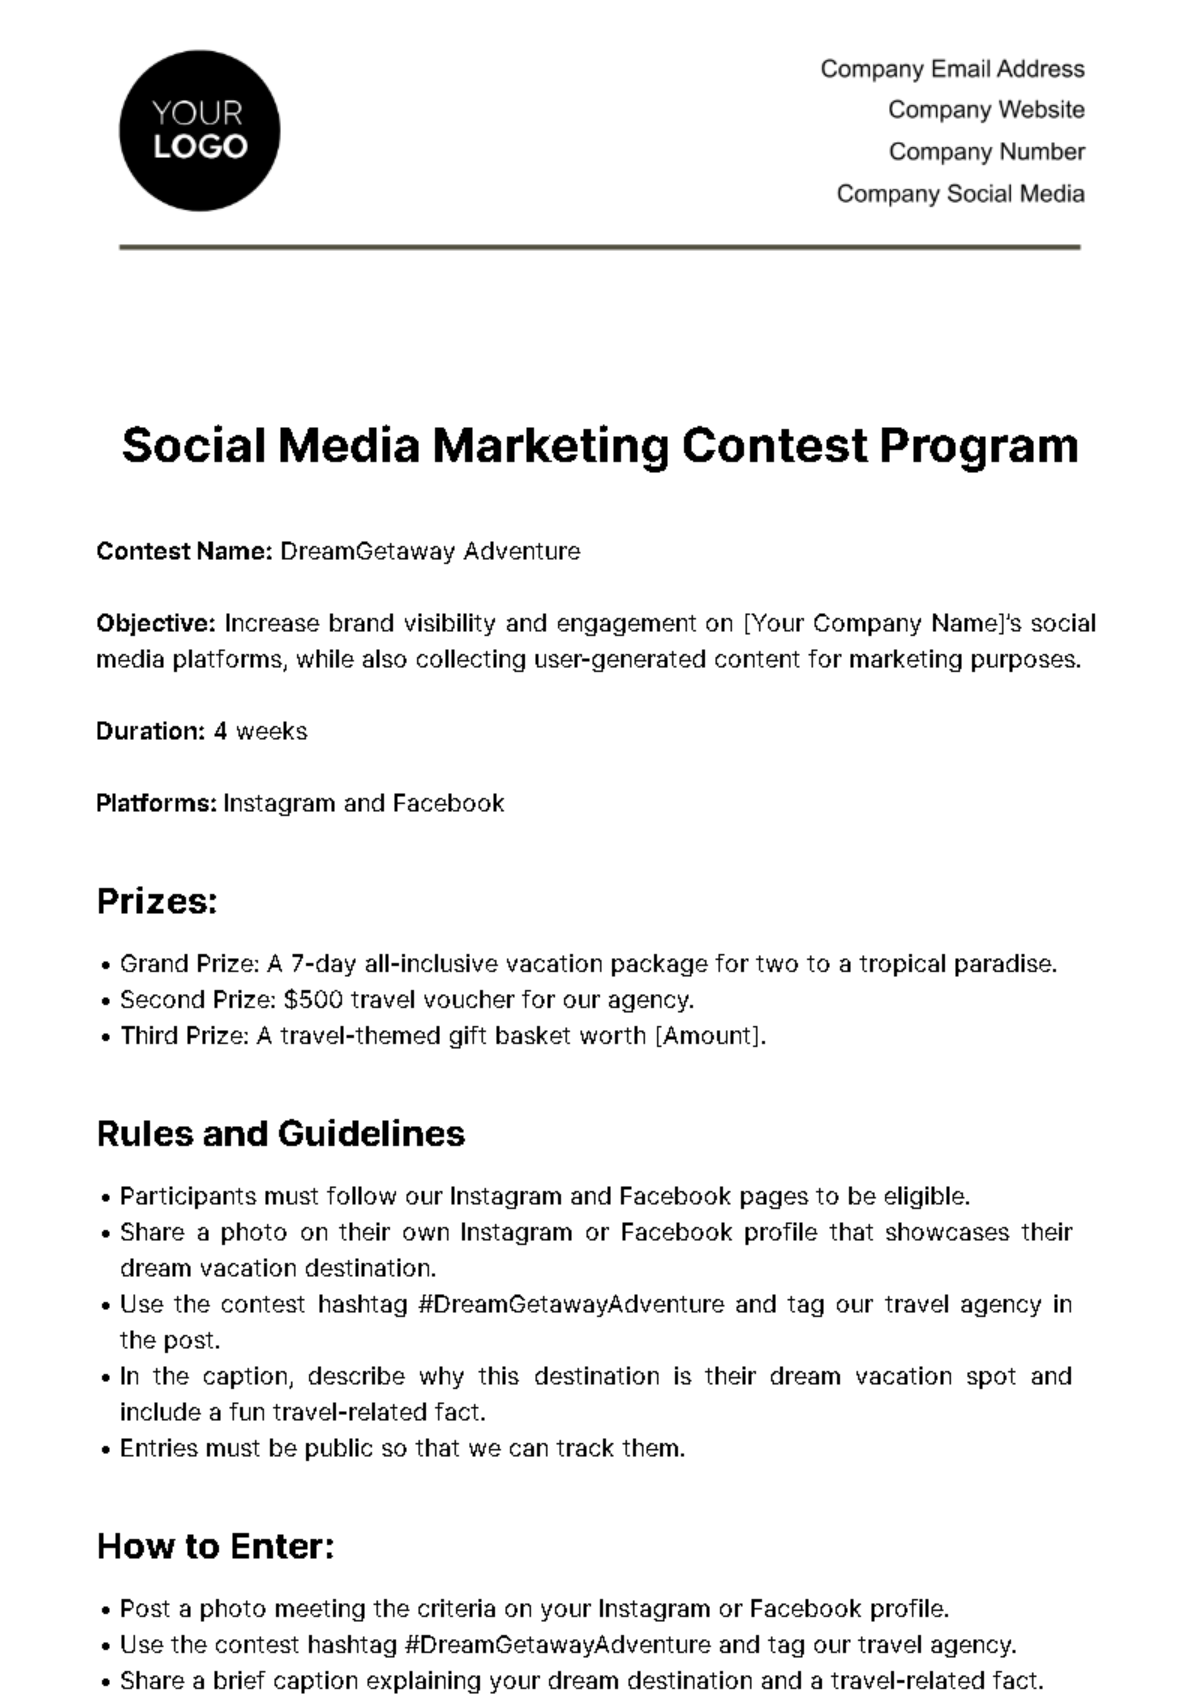 Social Media Marketing Contest Program Template